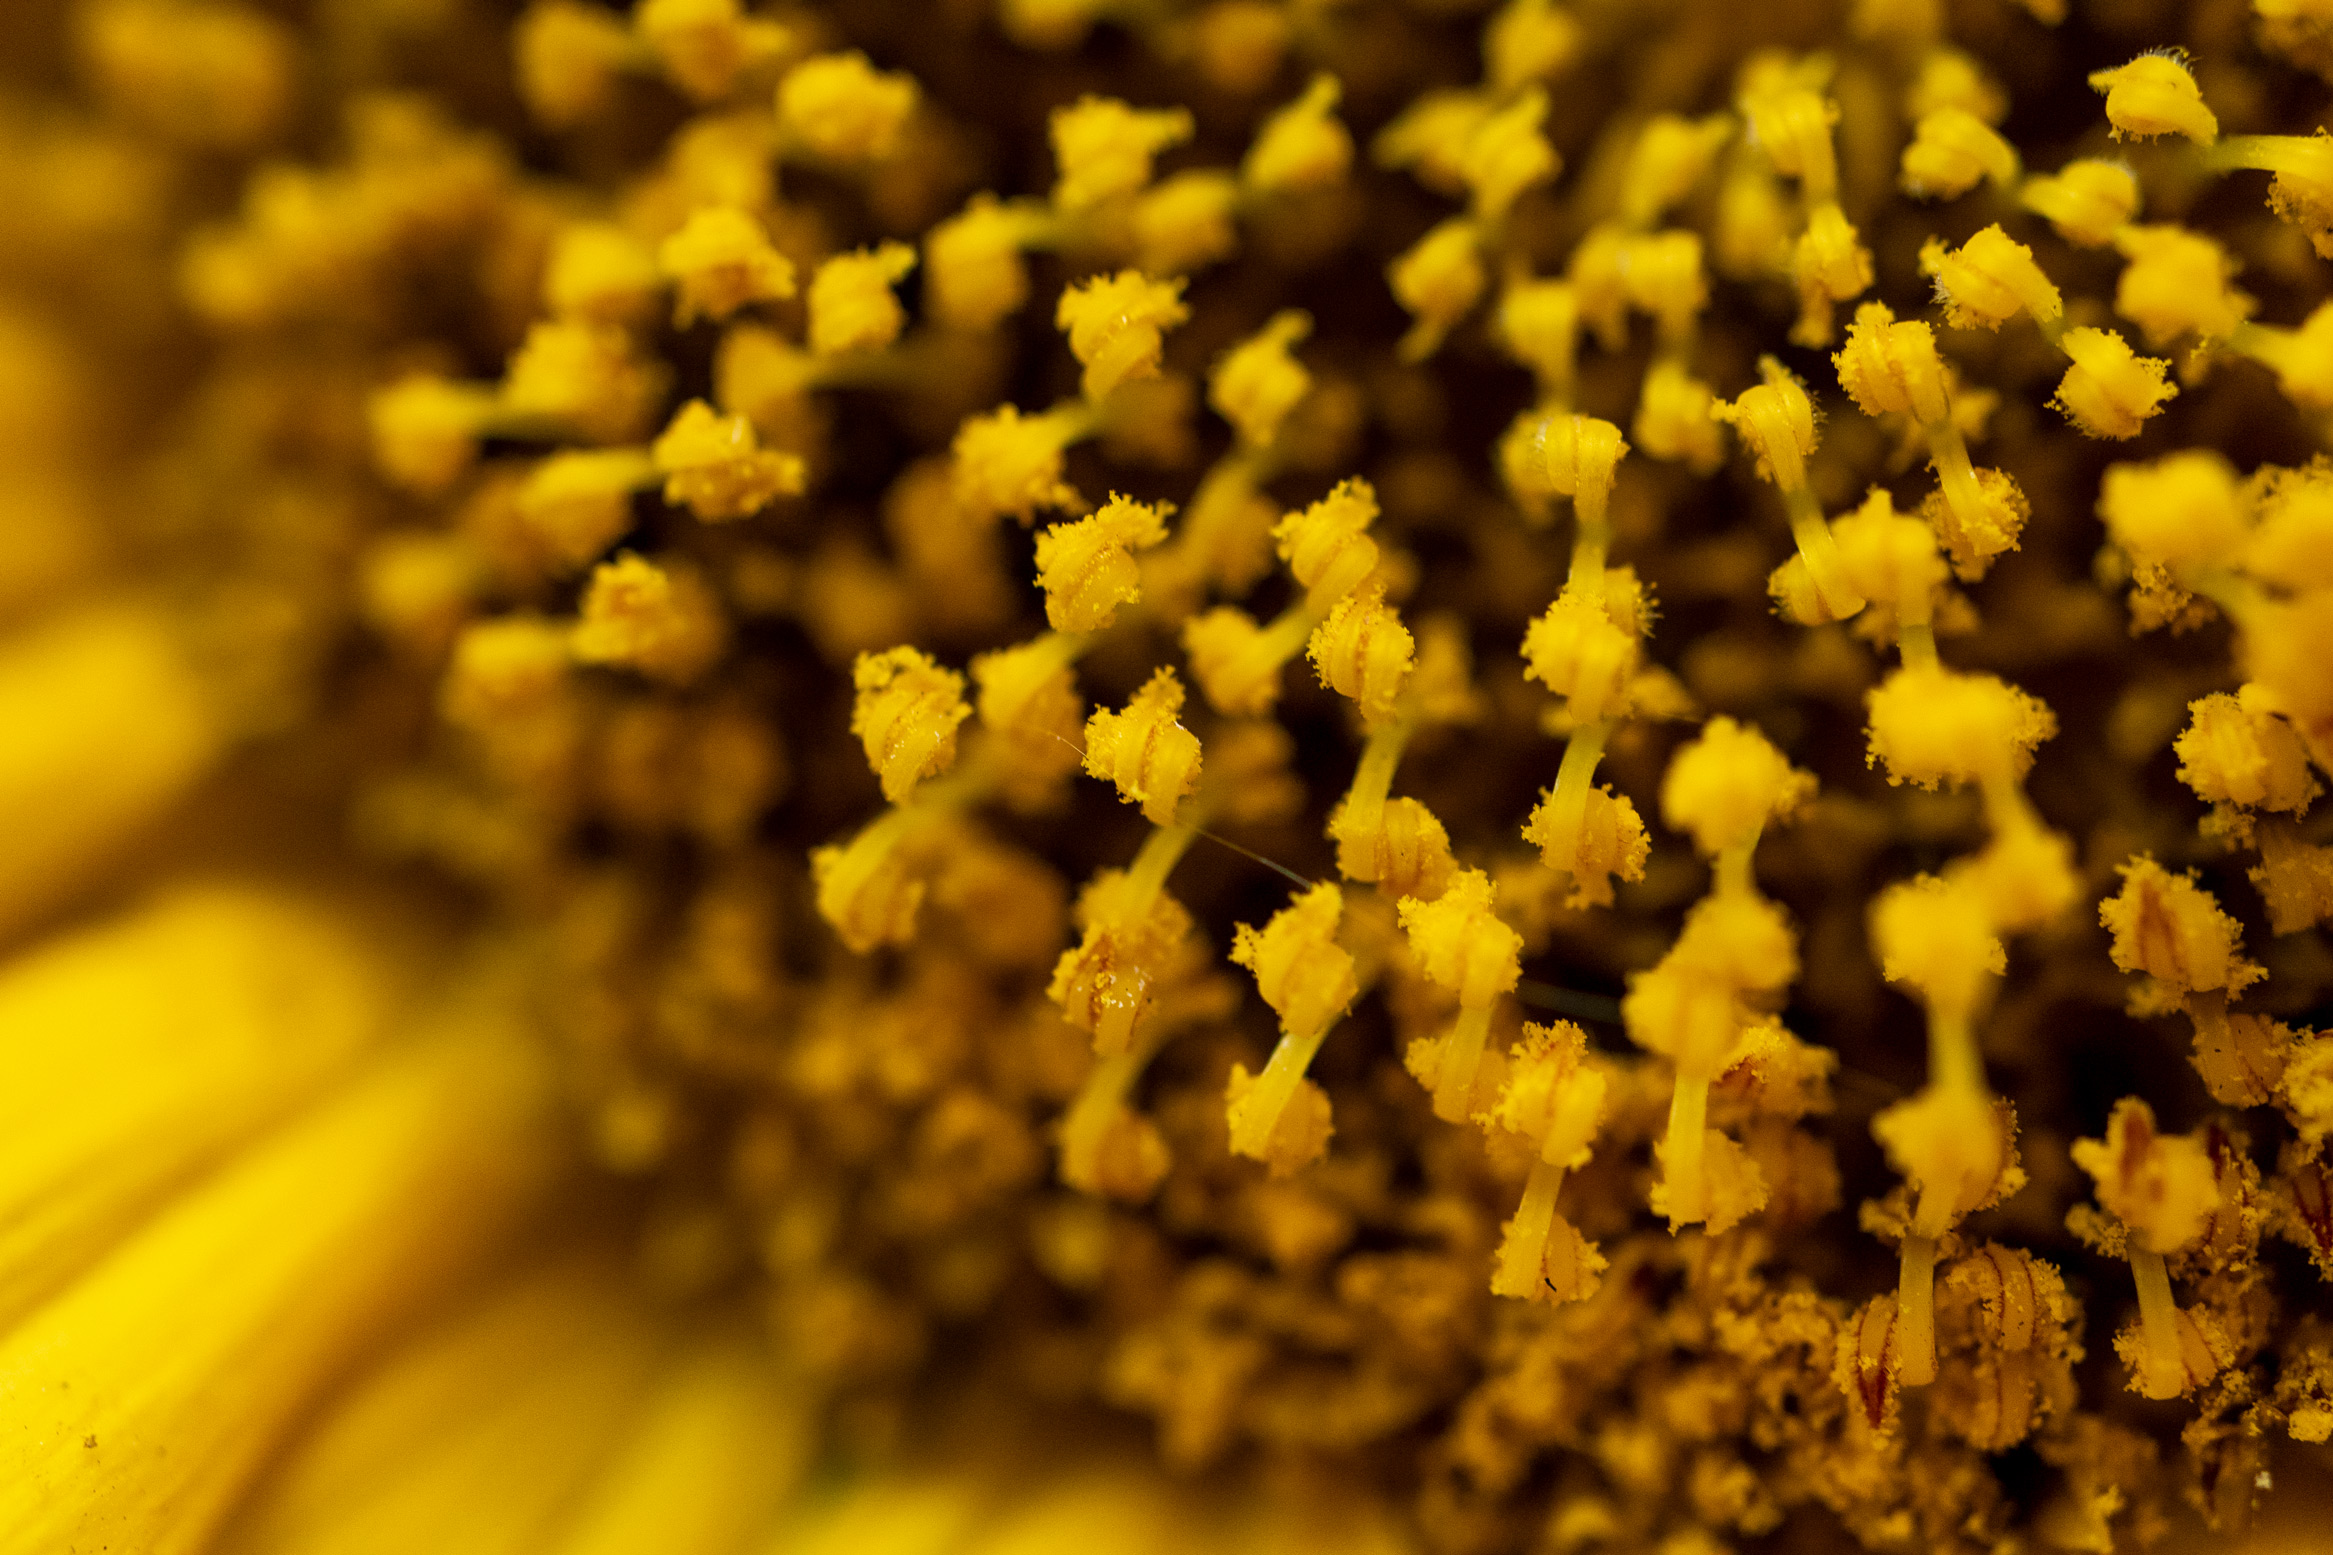 Clos-up photograph of a sunflower